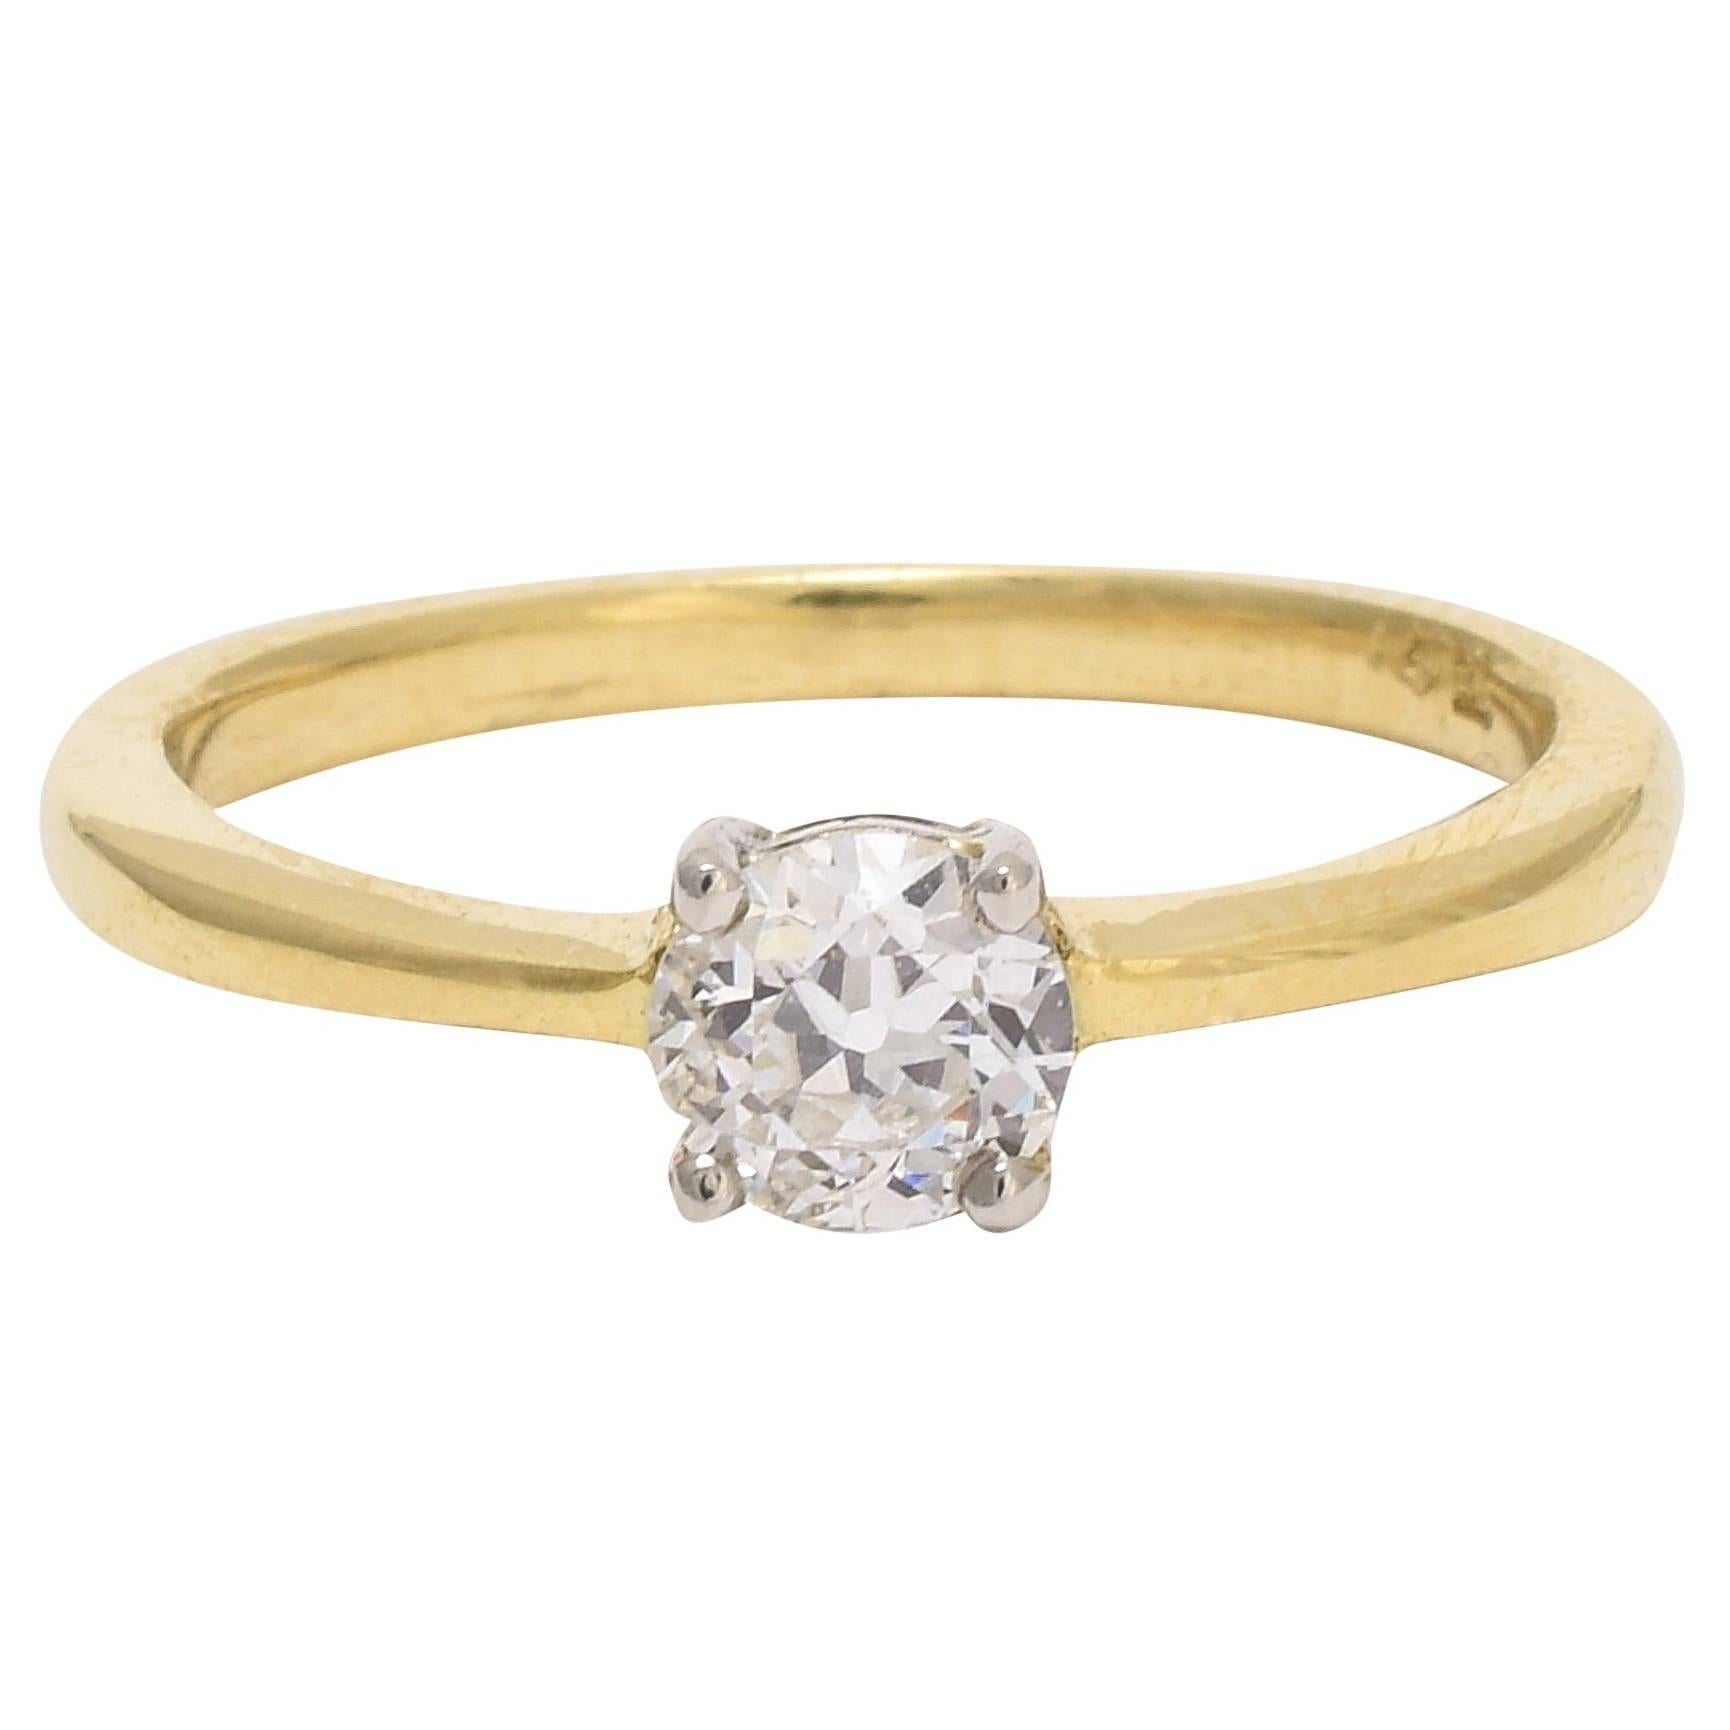 GIA Certified 0.47 Carat Transitional Cut Diamond Engagement Ring